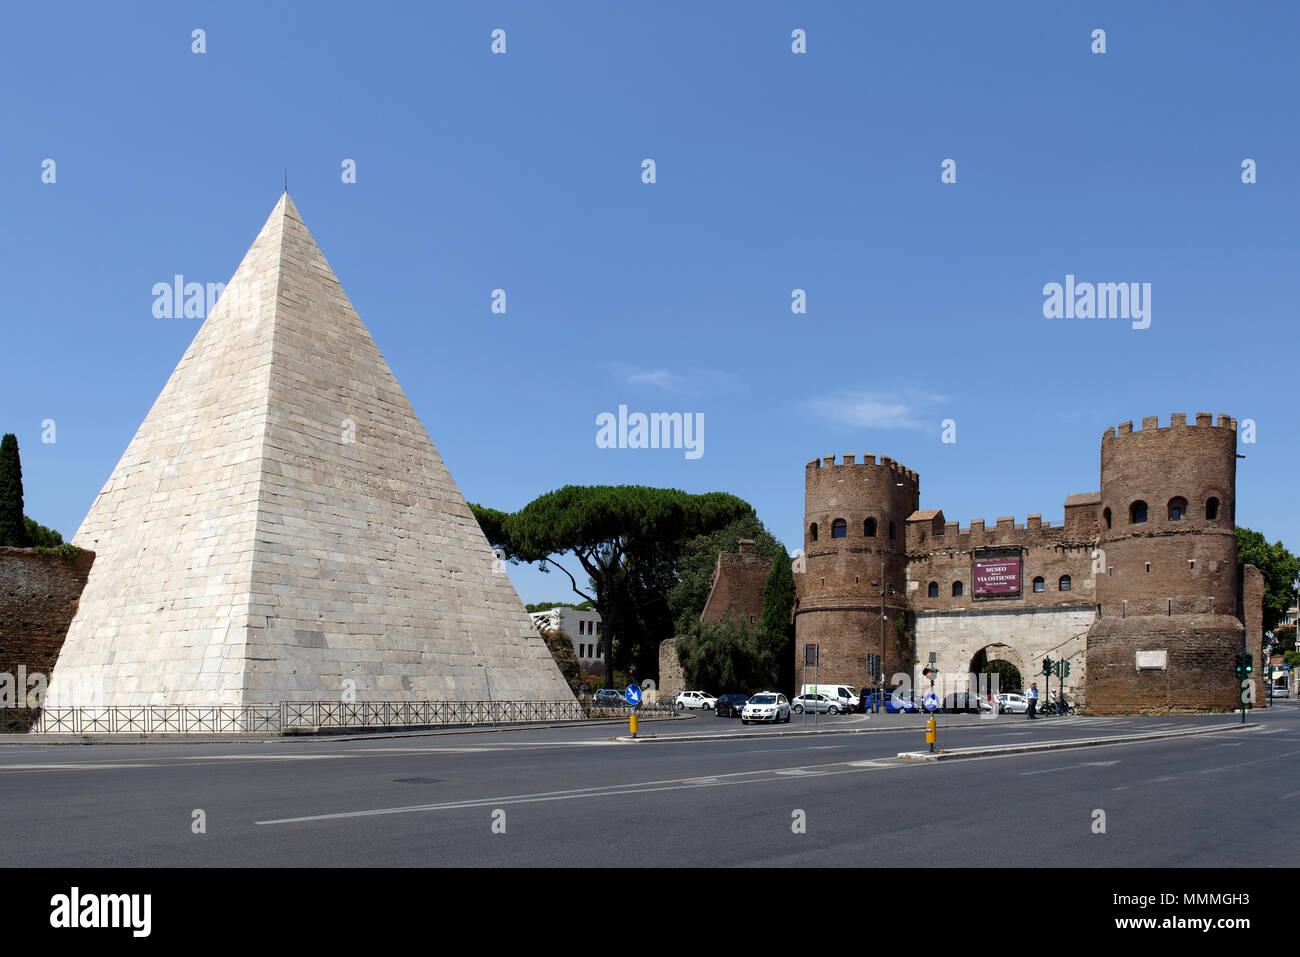 The Pyramid of Caius Cestius and the twin towered Porta San Paolo in the Rome neighbourhood of Testaccio. The Pyramid (Piramide di Caio Cestio) was bu Stock Photo